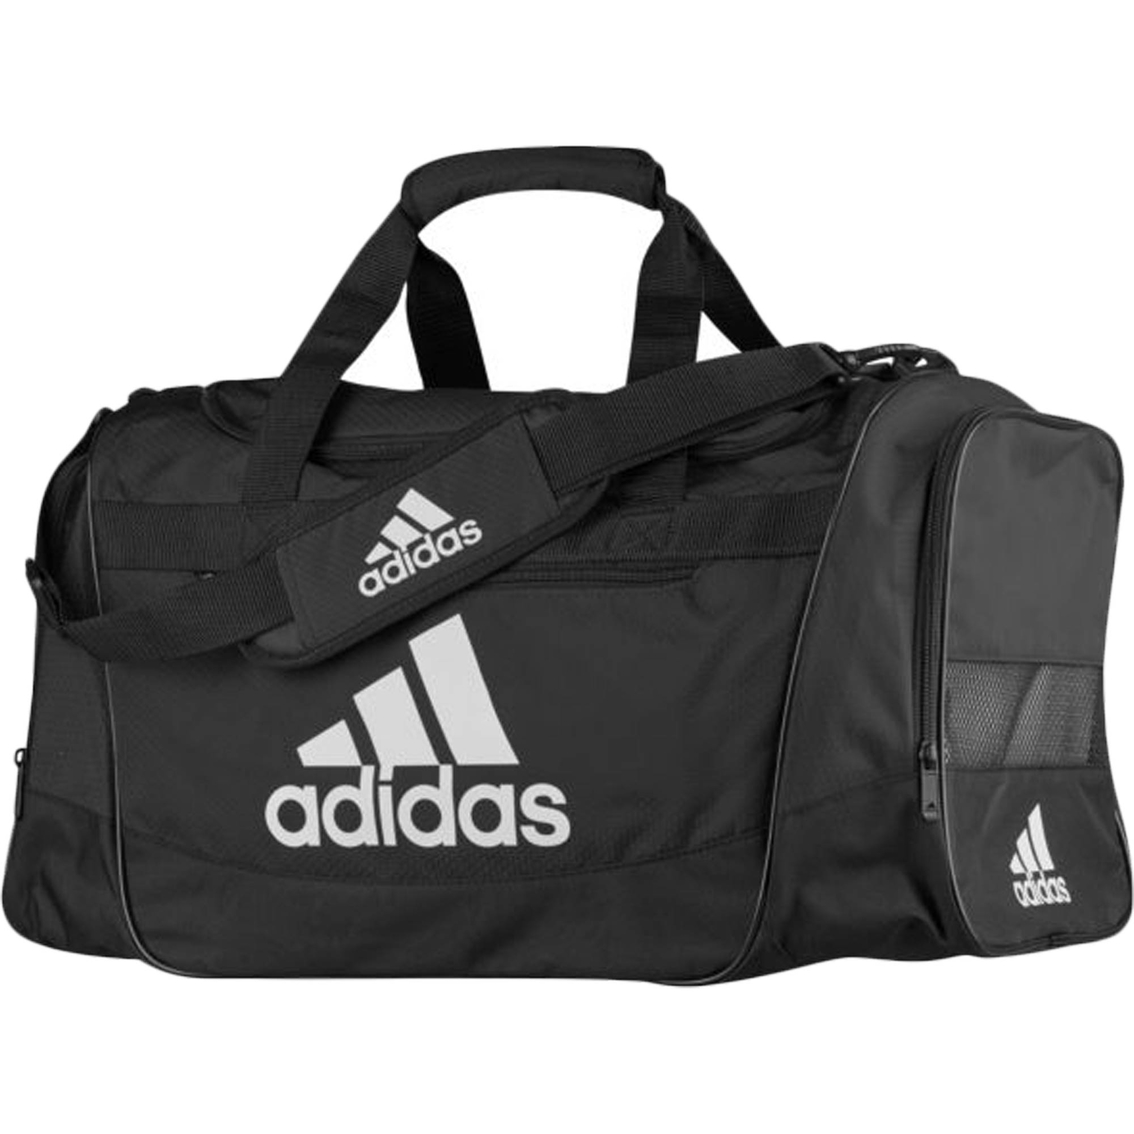 Adidas Defender Iii Medium Duffel Bag | Luggage | Clothing ...